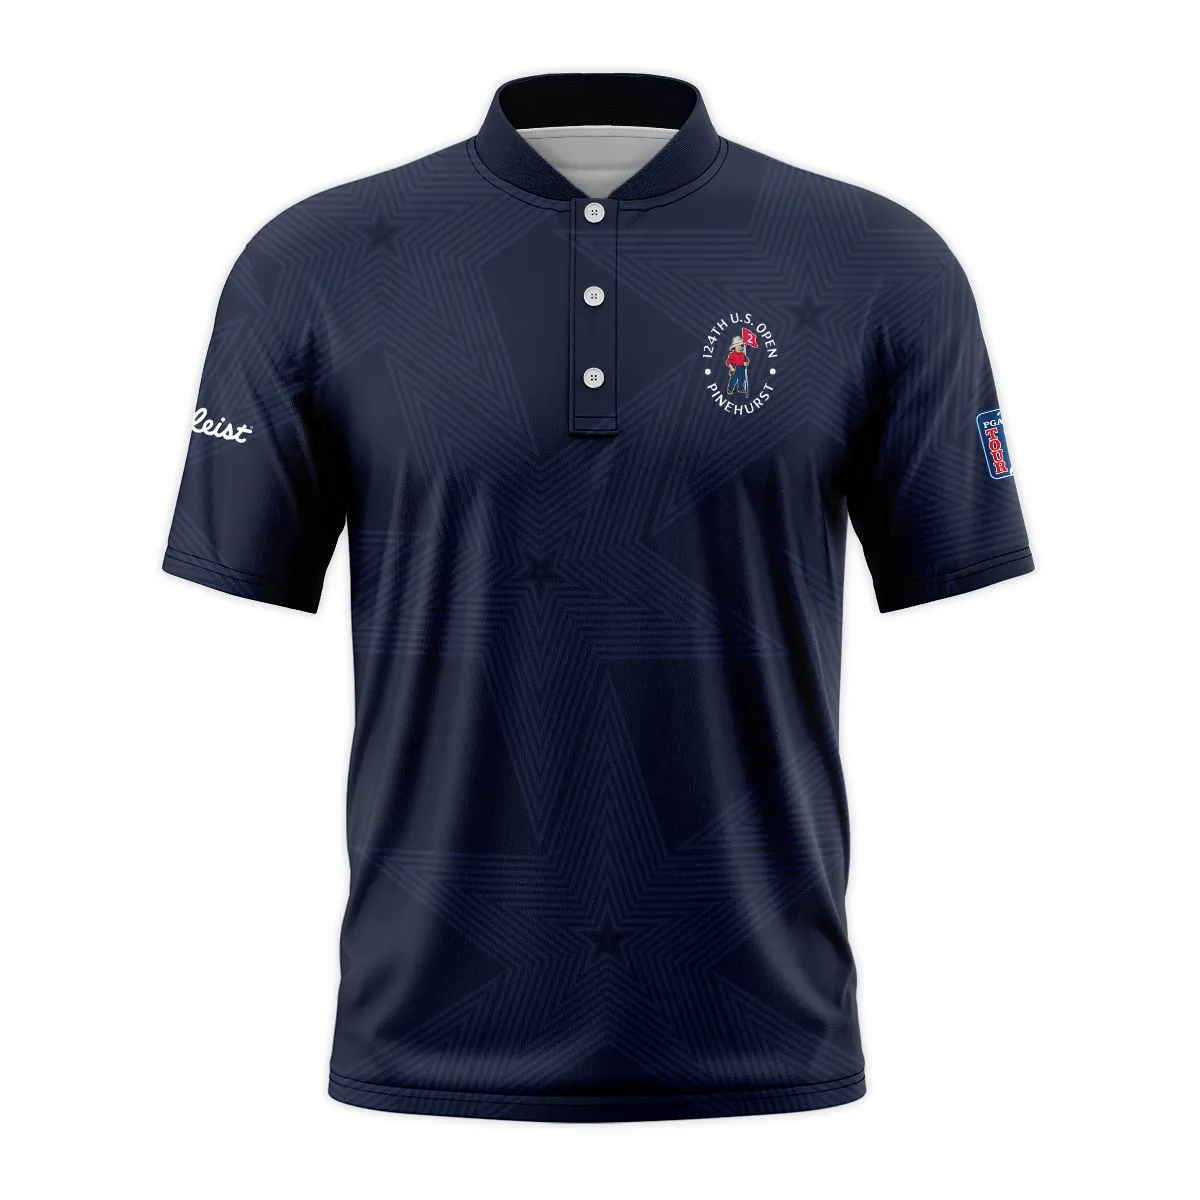 Golf Navy Color Star Pattern 124th U.S. Open Pinehurst Titlest Zipper Polo Shirt Style Classic